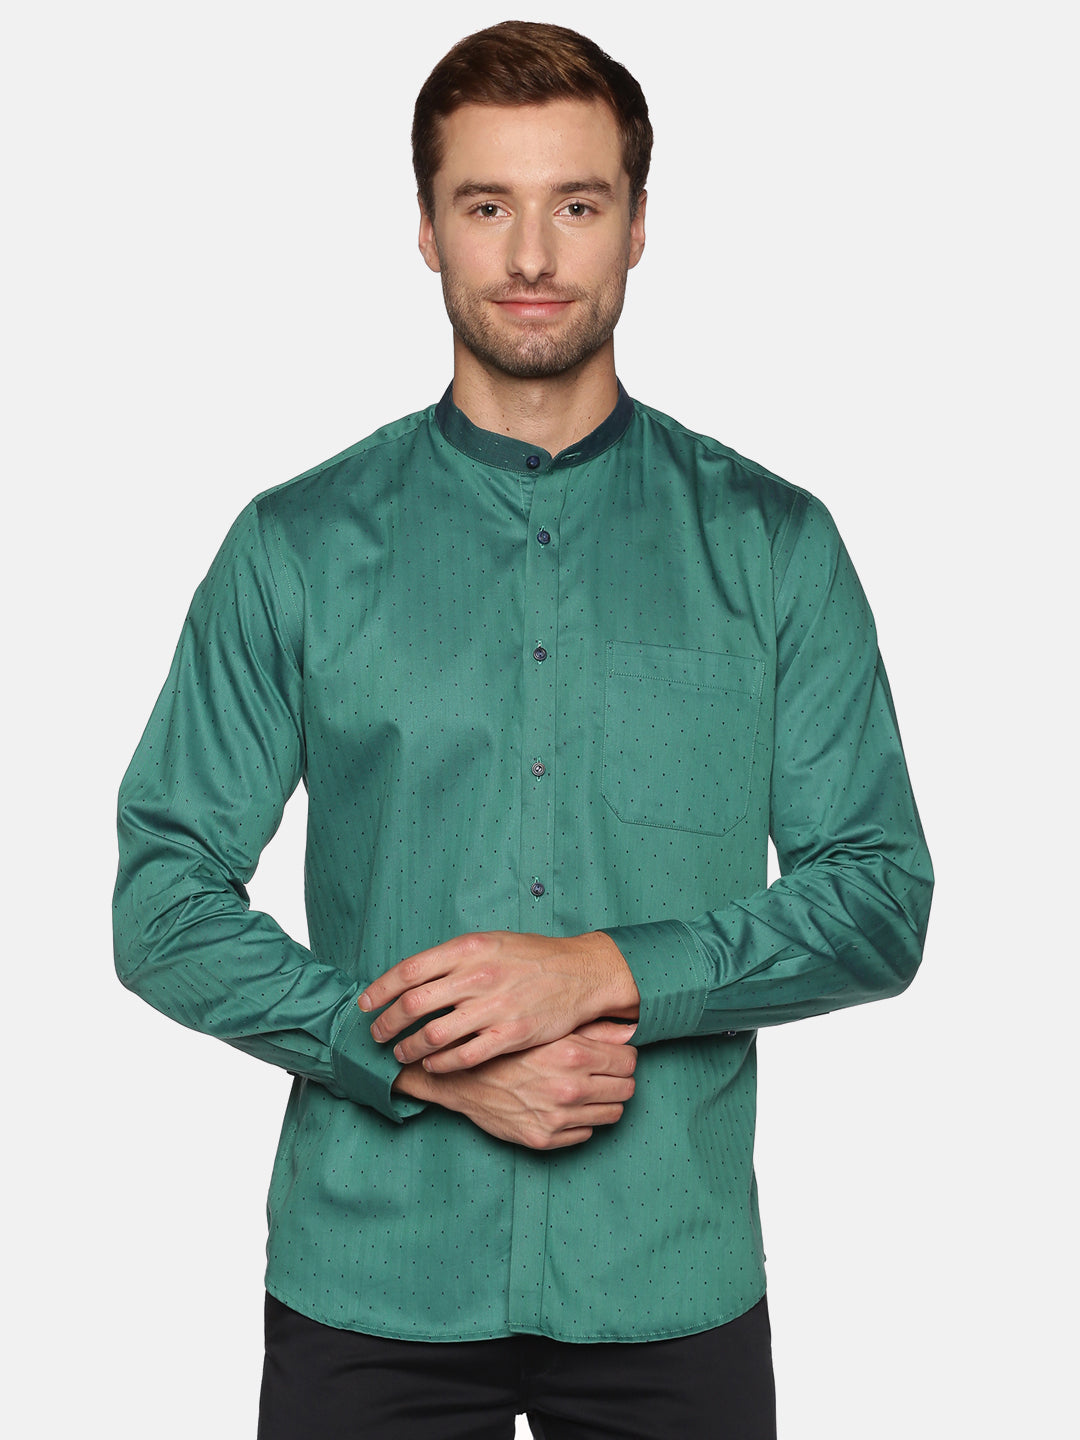 Don Vino Men's Green Dot Printed Full Sleeve Casual Shirt